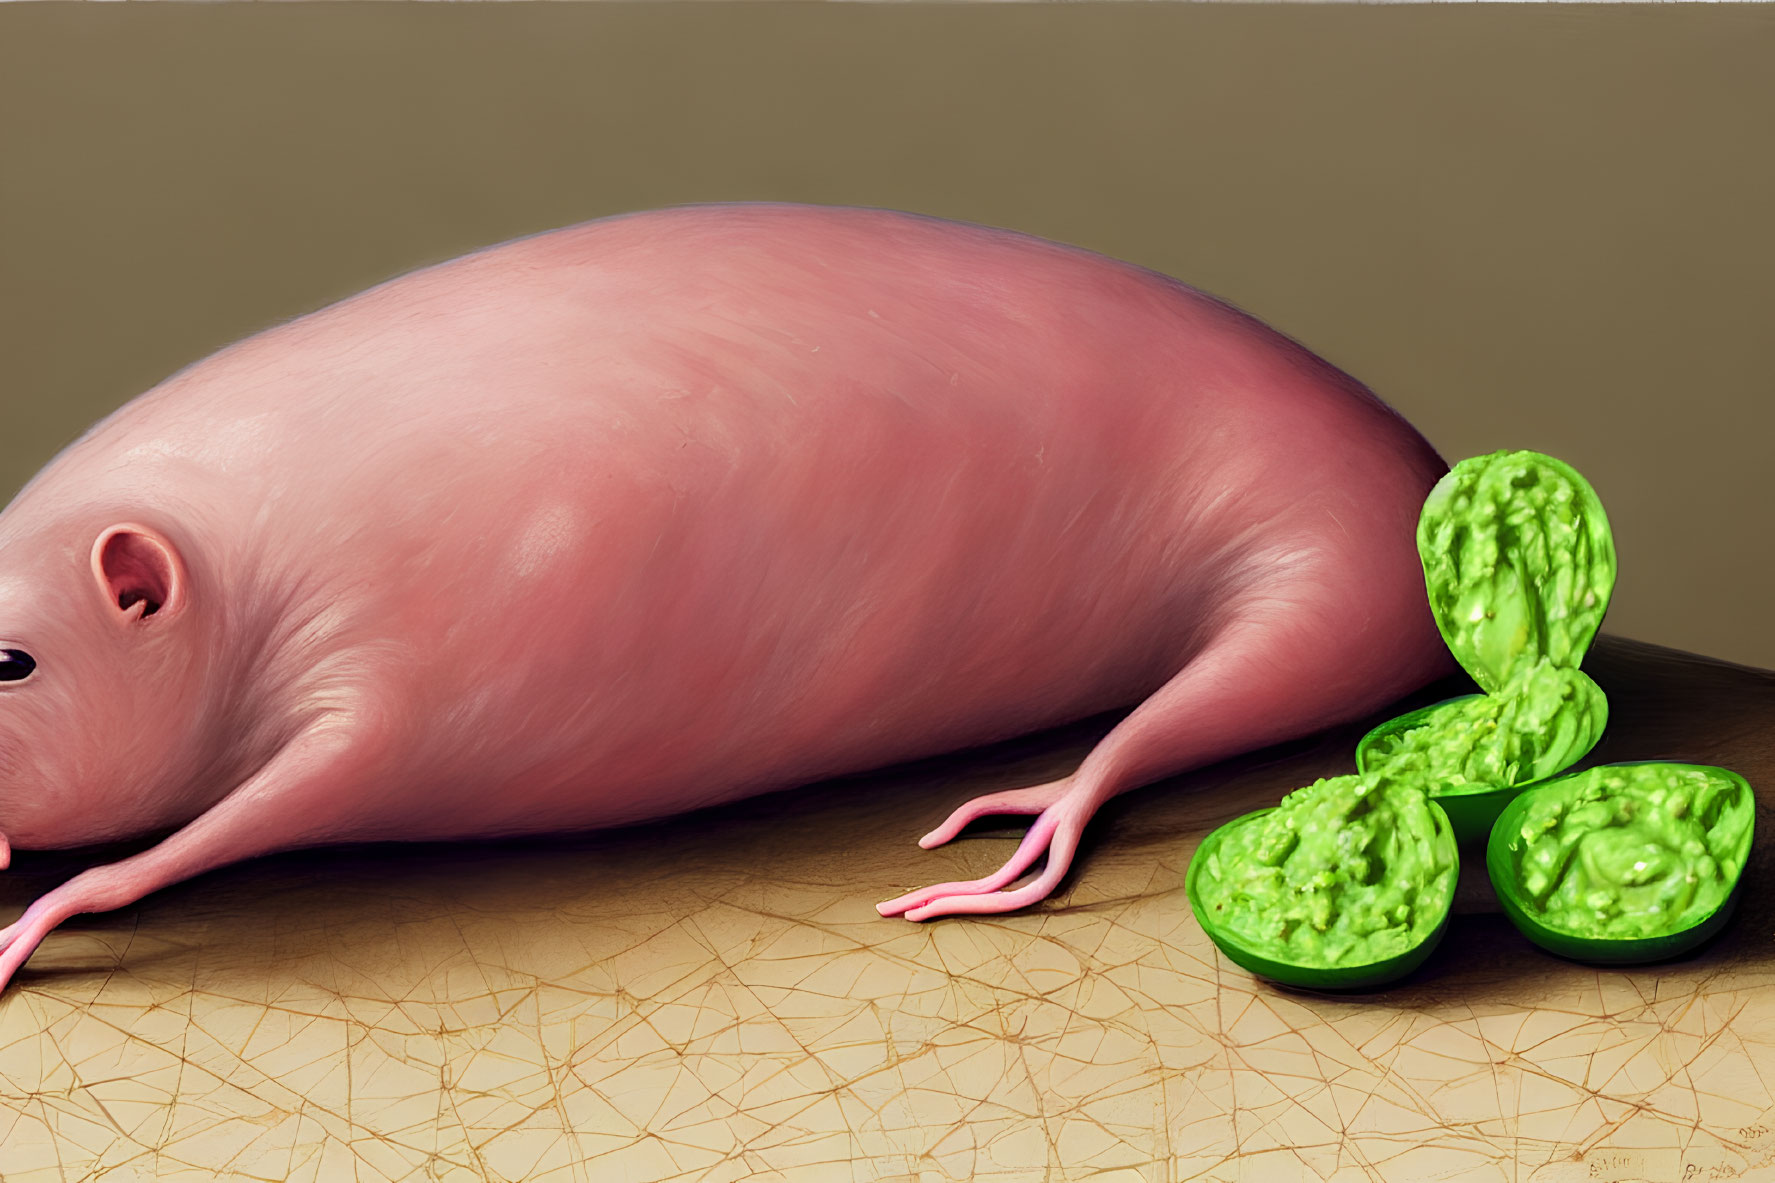 Surreal artwork: Hairless pink pig next to elongated cacti